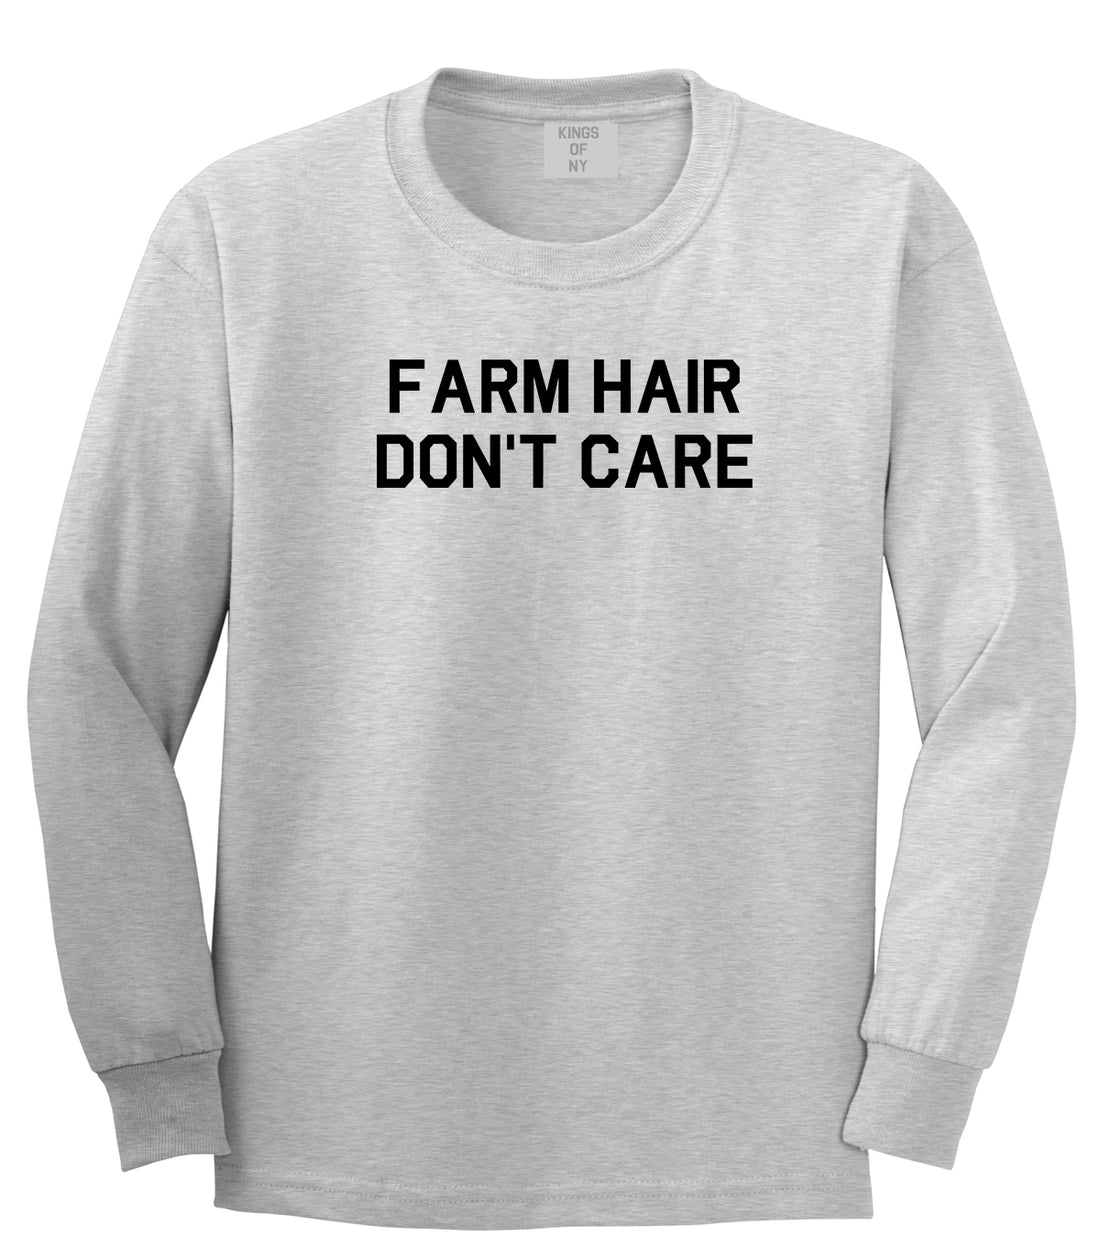 Farm Hair Dont Care Mens Grey Long Sleeve T-Shirt by KINGS OF NY